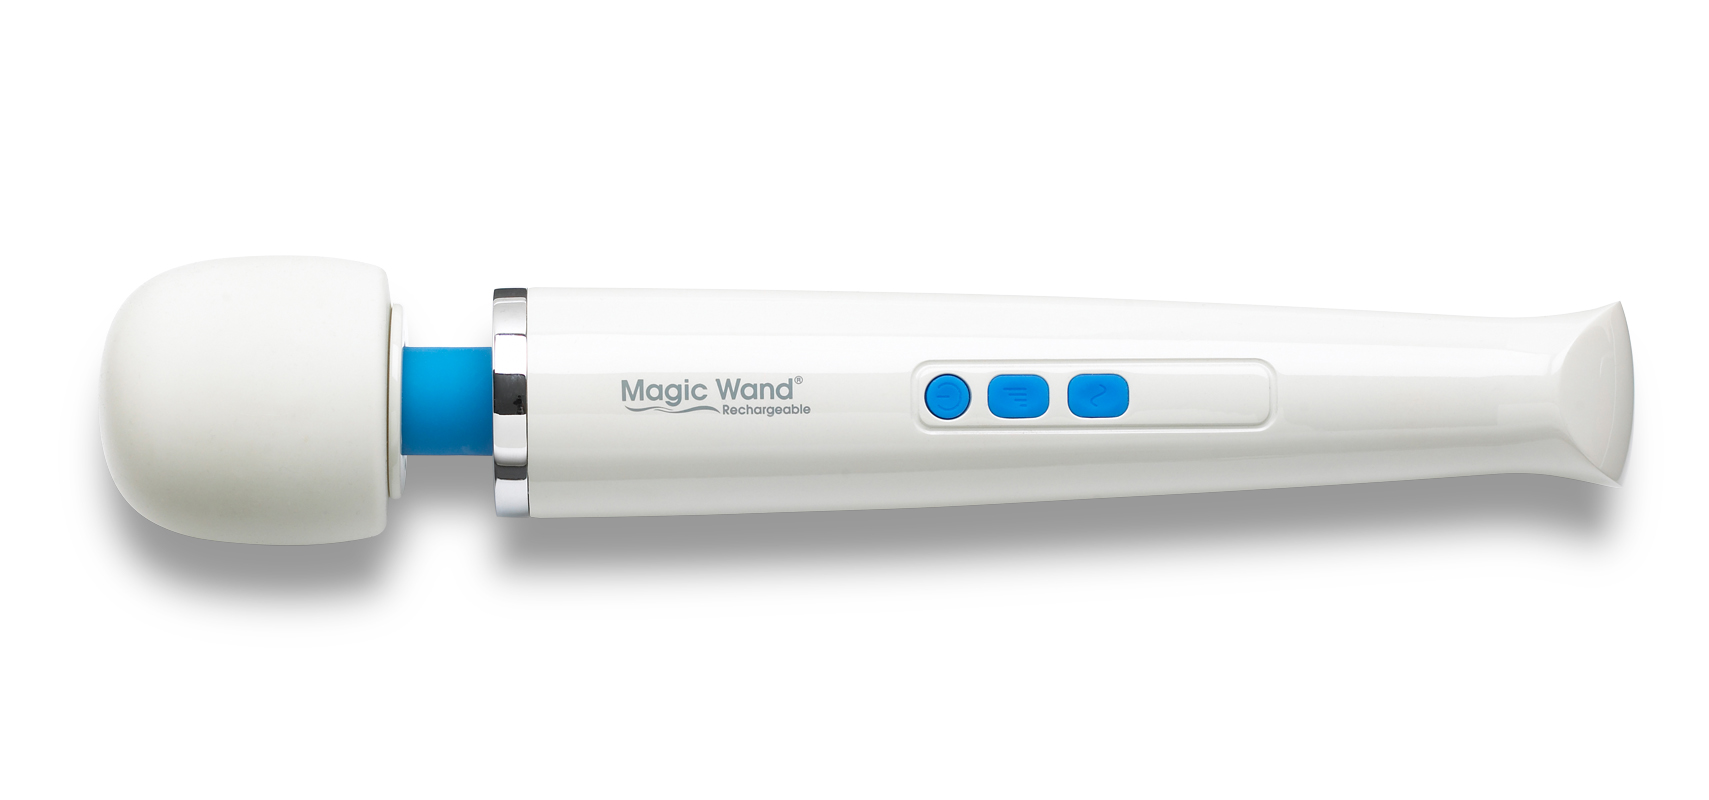 A cordless magic wand rechargeable vibrator